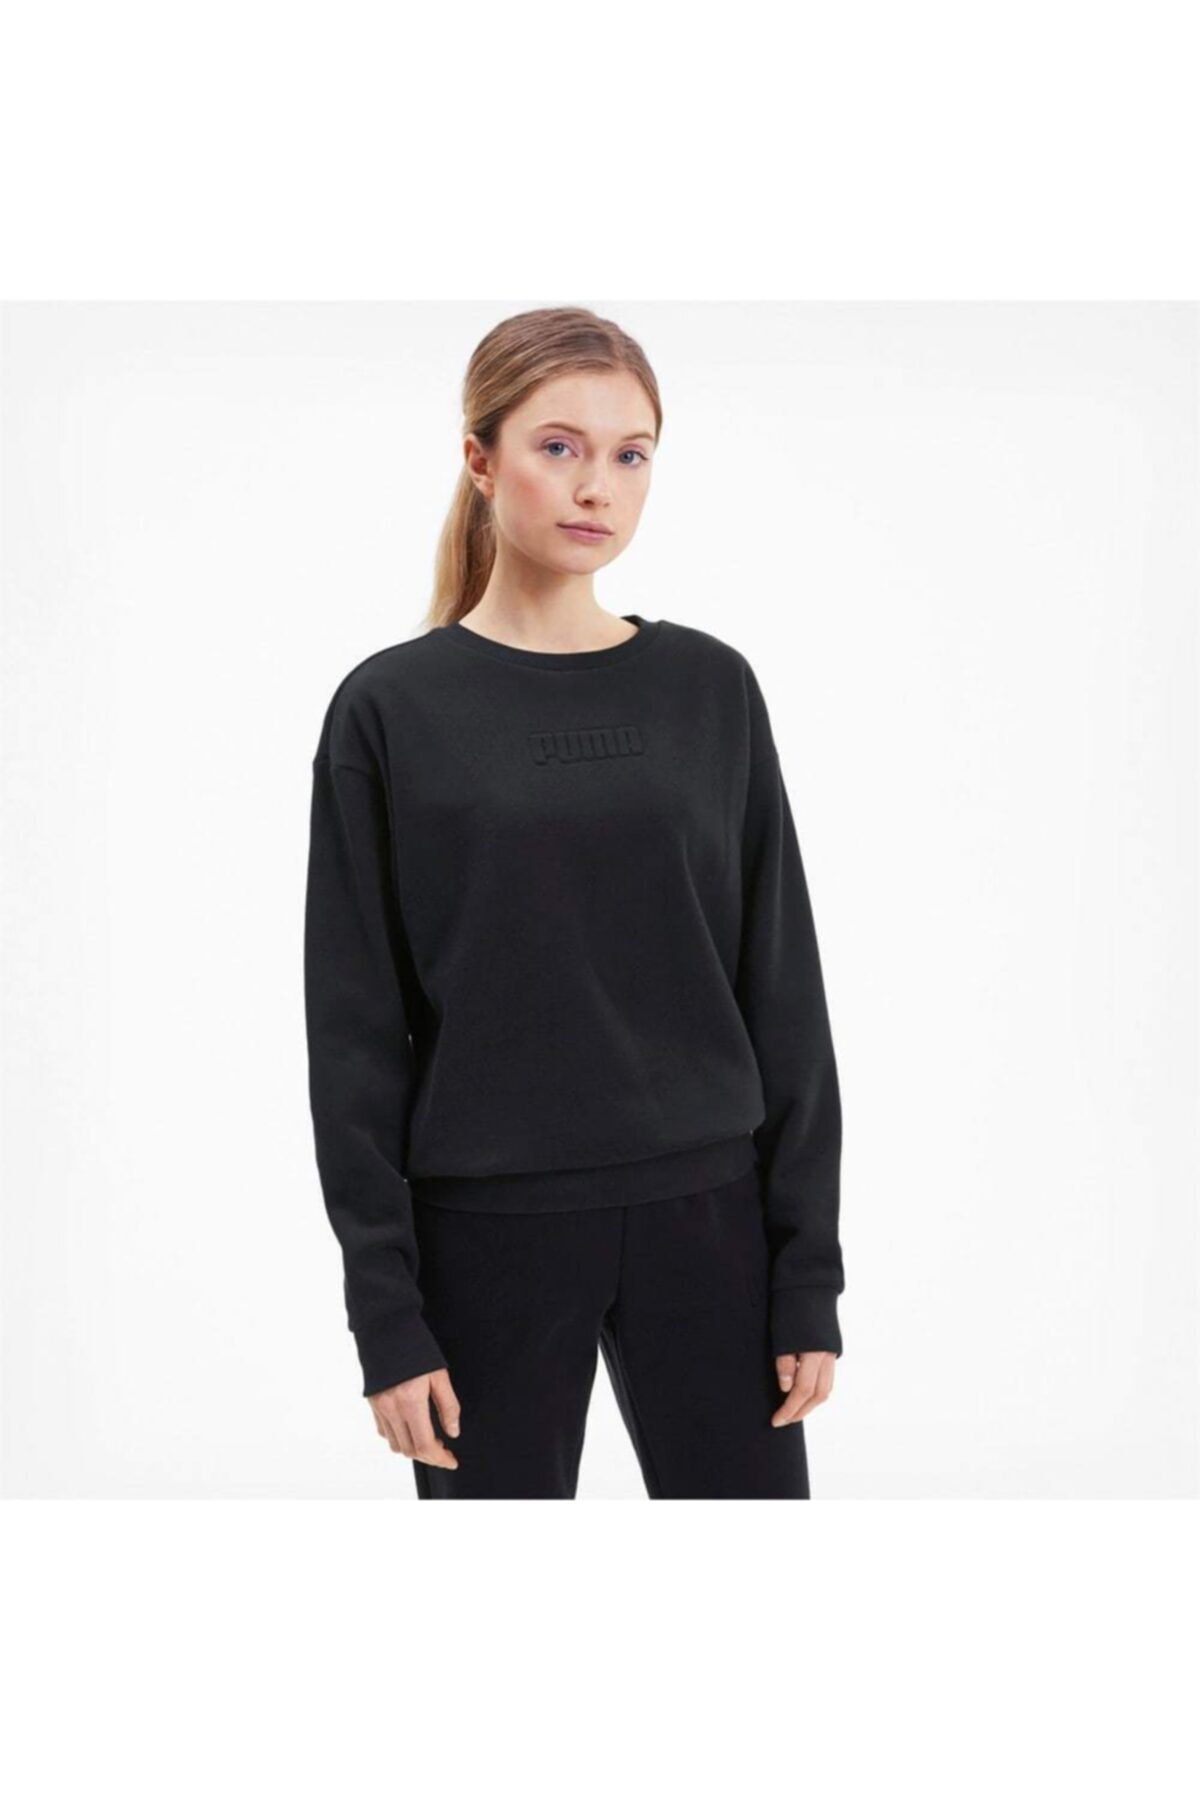 Puma MODERN BASICS CREW FL Siyah Kadın Sweatshirt 101119452